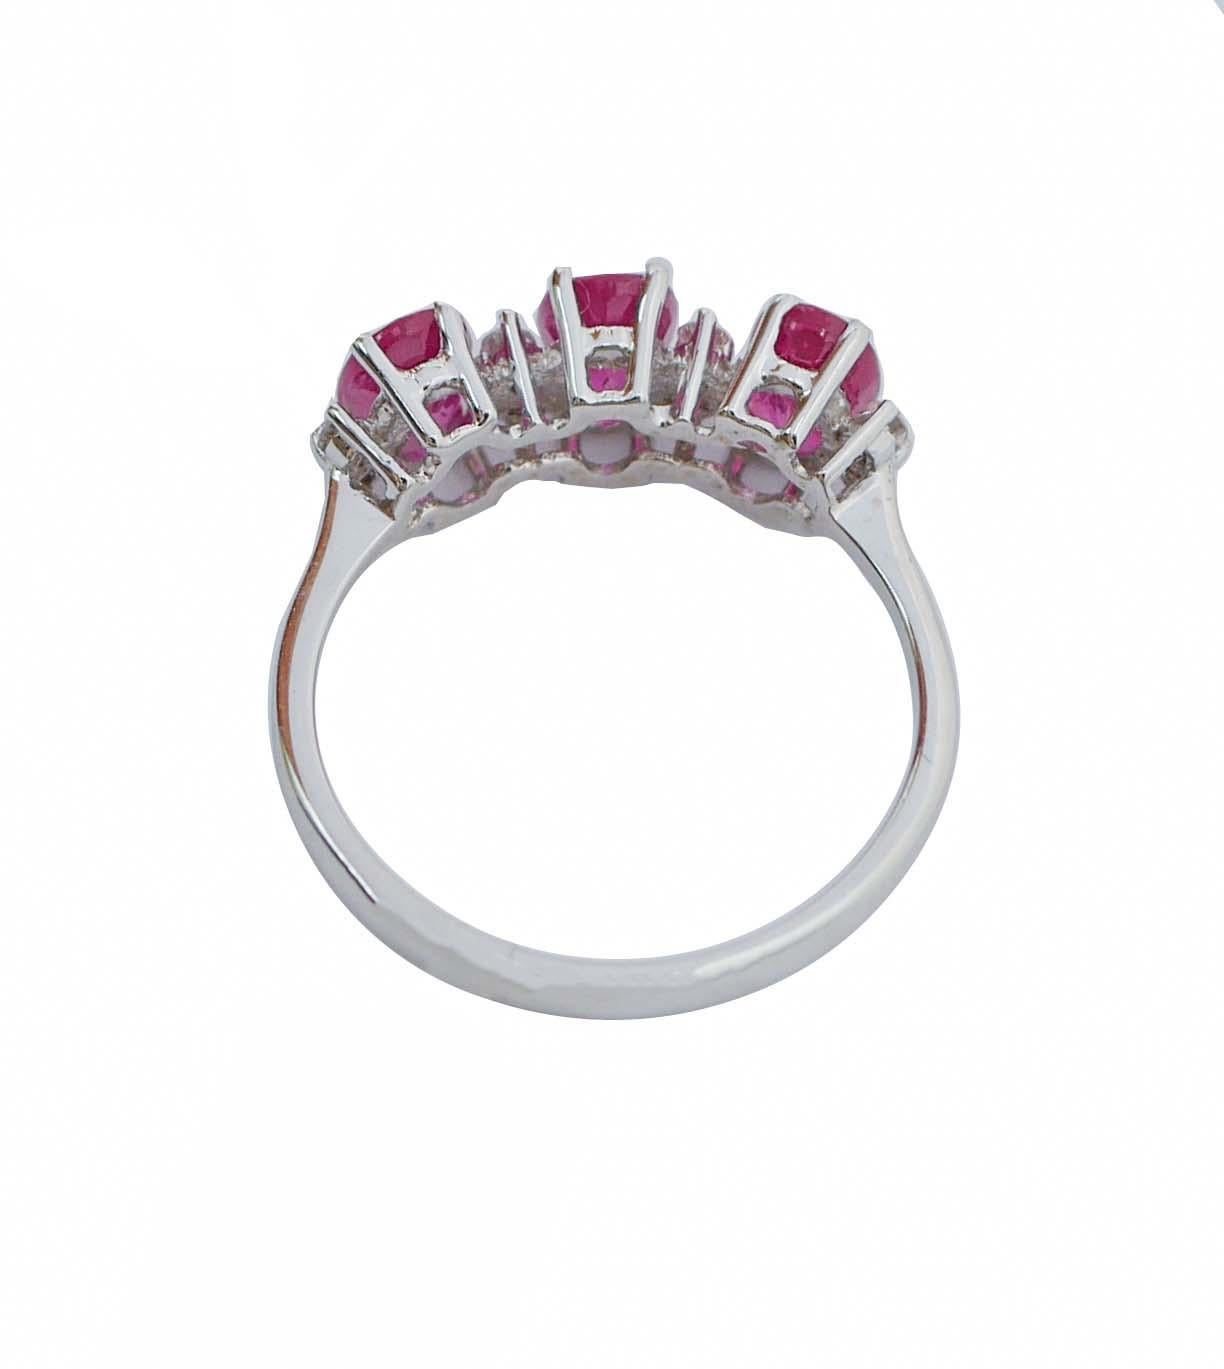 Mixed Cut Rubies, Diamonds, 18 Karat White Gold Modern Ring. For Sale